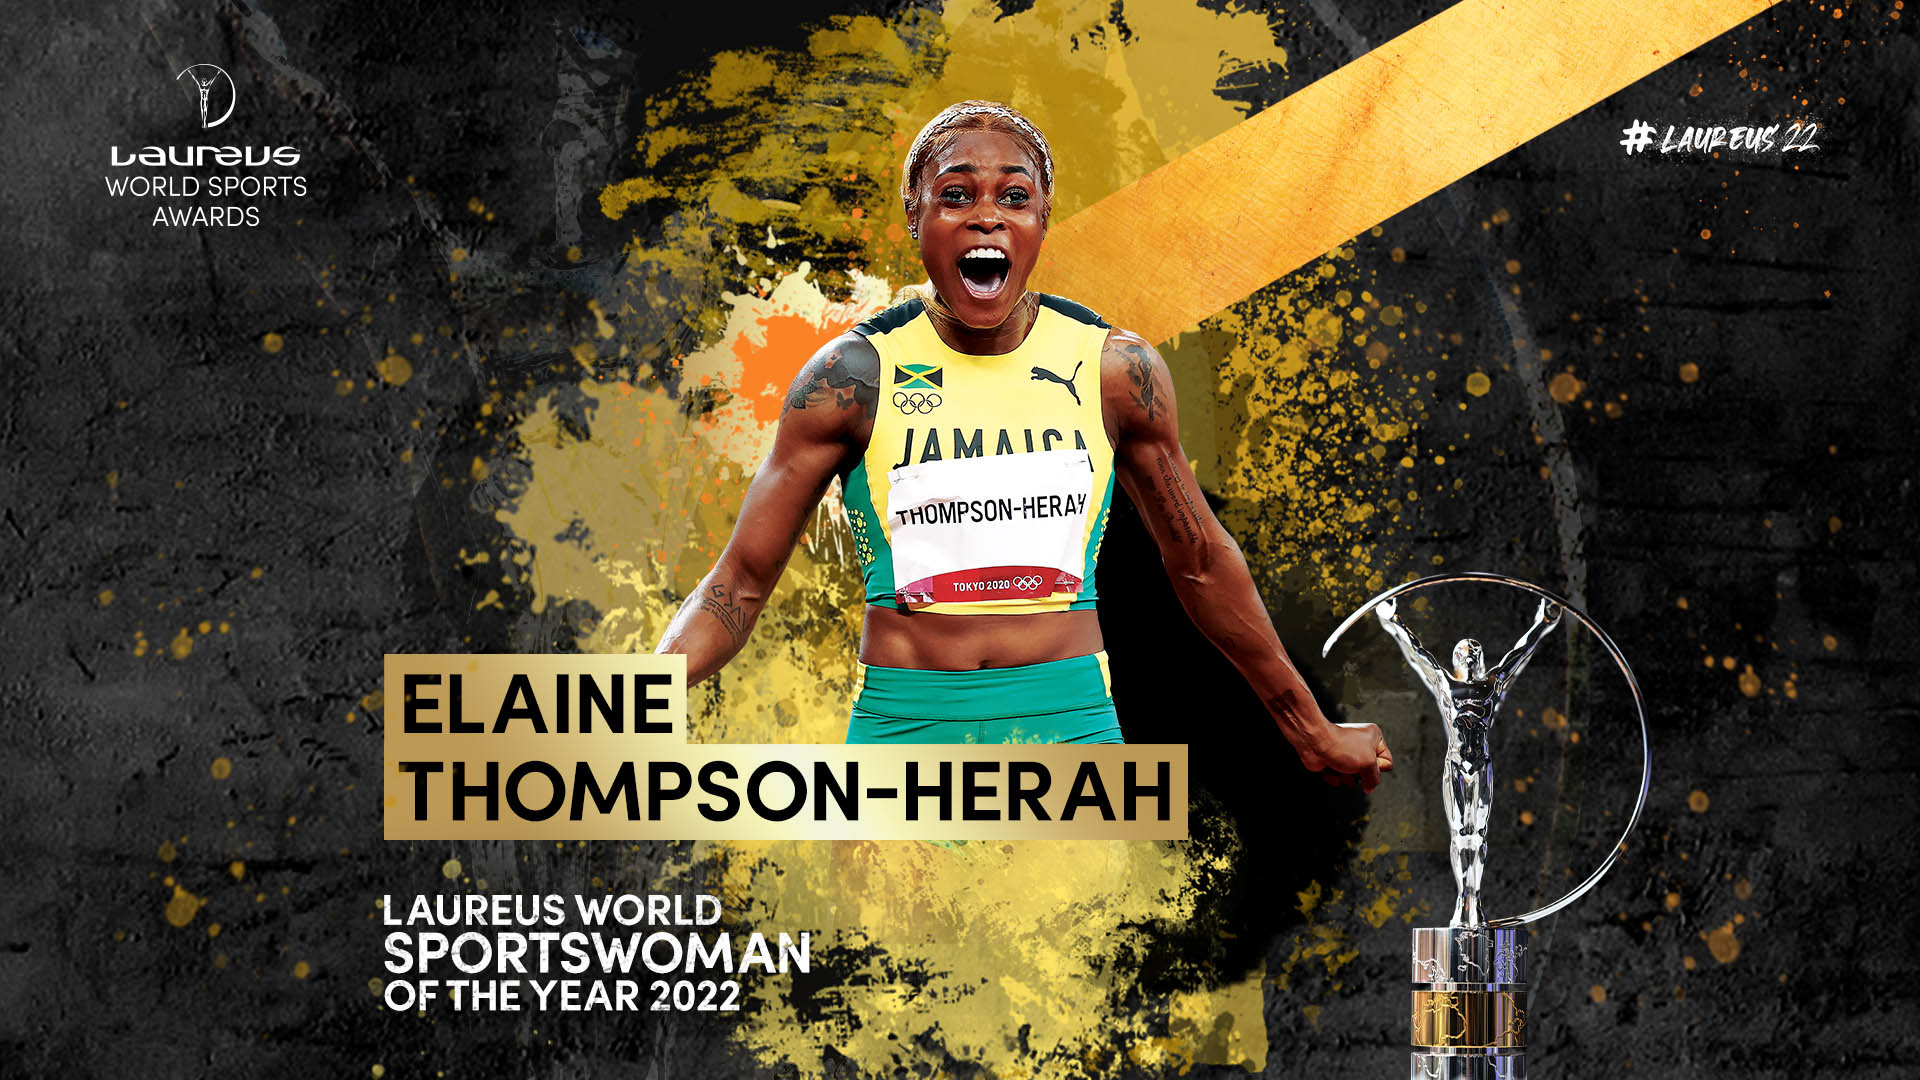 Laureus World Sportswoman of the Year Award 2022 - Elaine Thompson-Herah